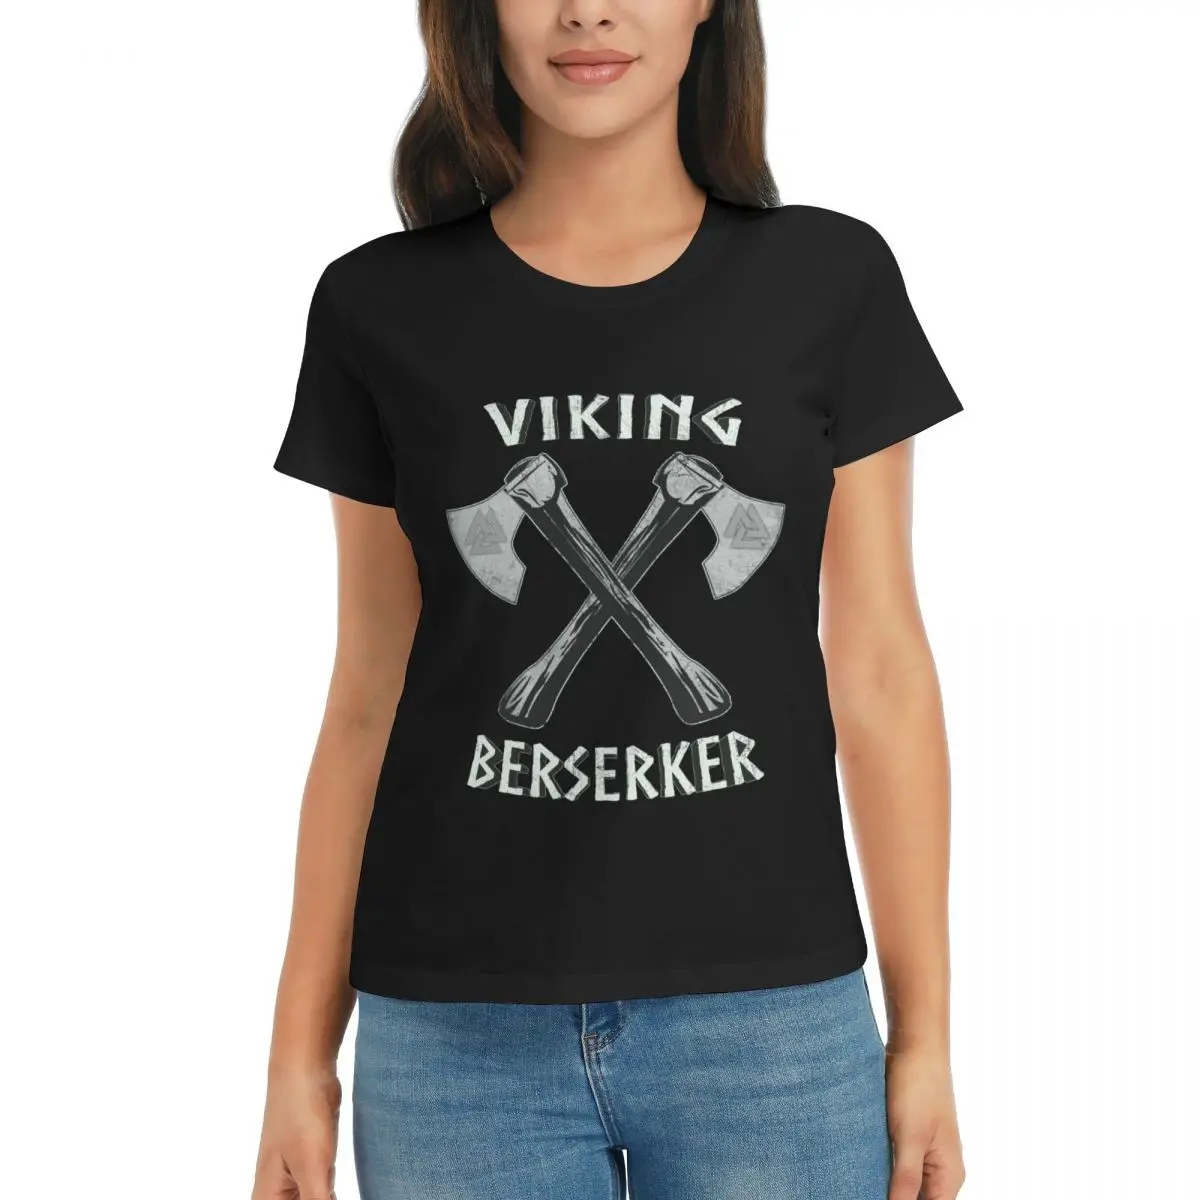 

R339 Vikings Berserker Vikings Campaign Tees High grade Activity competition Black premium Eur Size